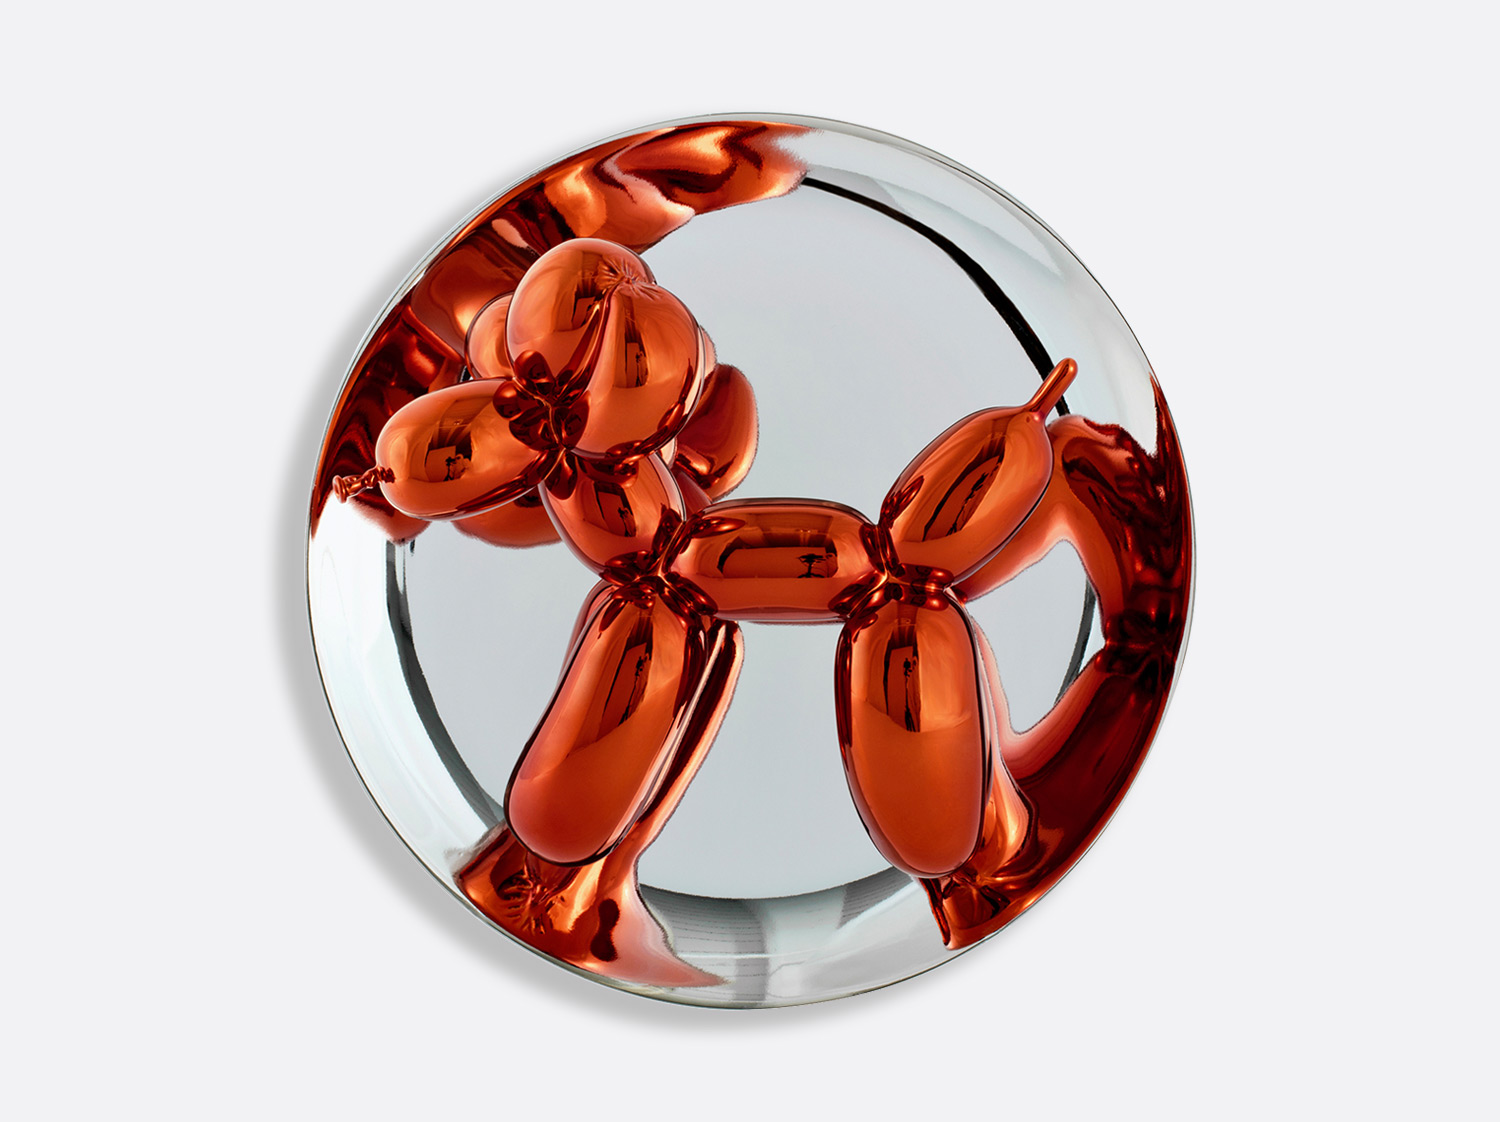 China Balloon Dog (Orange) by Jeff Koons of the collection BALLOON DOG (ORANGE) by Jeff Koons | Bernardaud